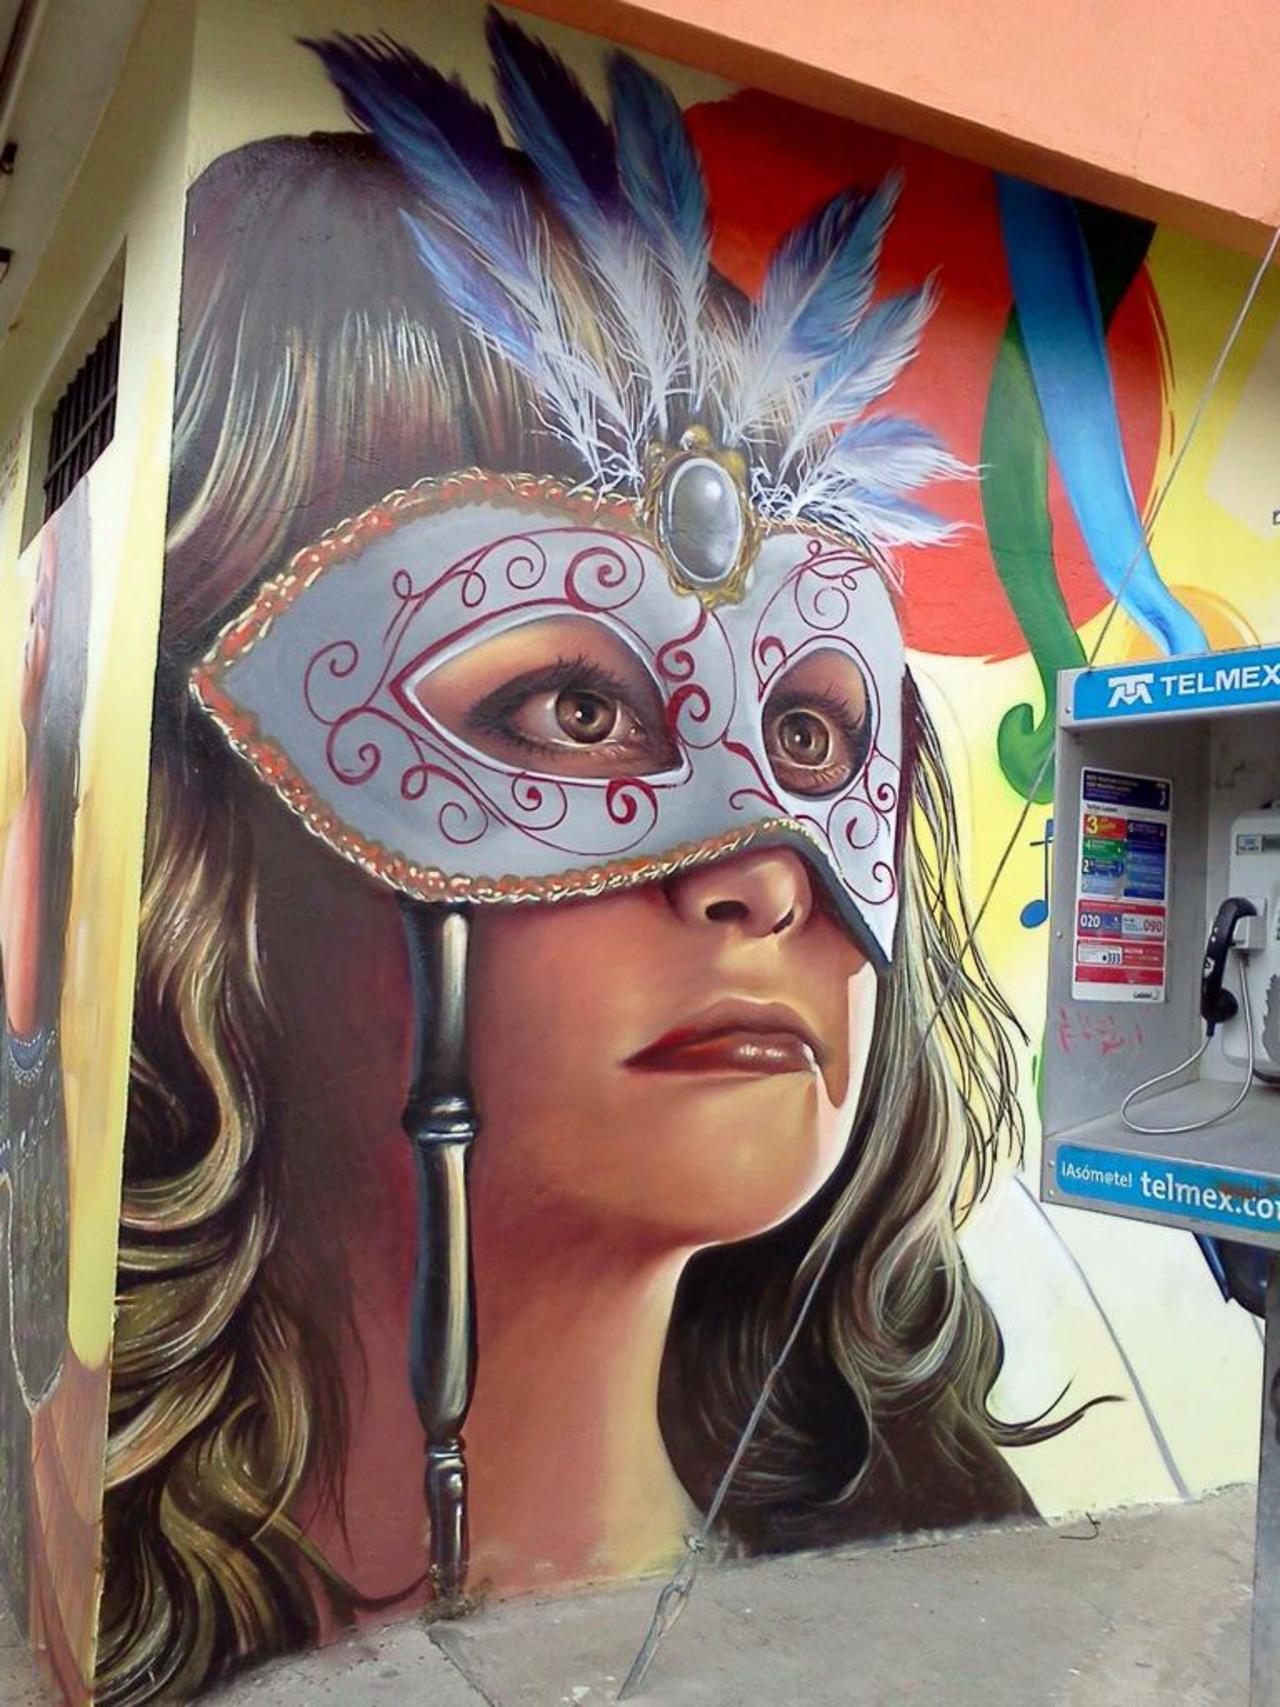 “@GoogleStreetArt: Street Art by Noriega Jose Luis

#art #arte #graffiti #streetart http://t.co/RuluvZNlPM”